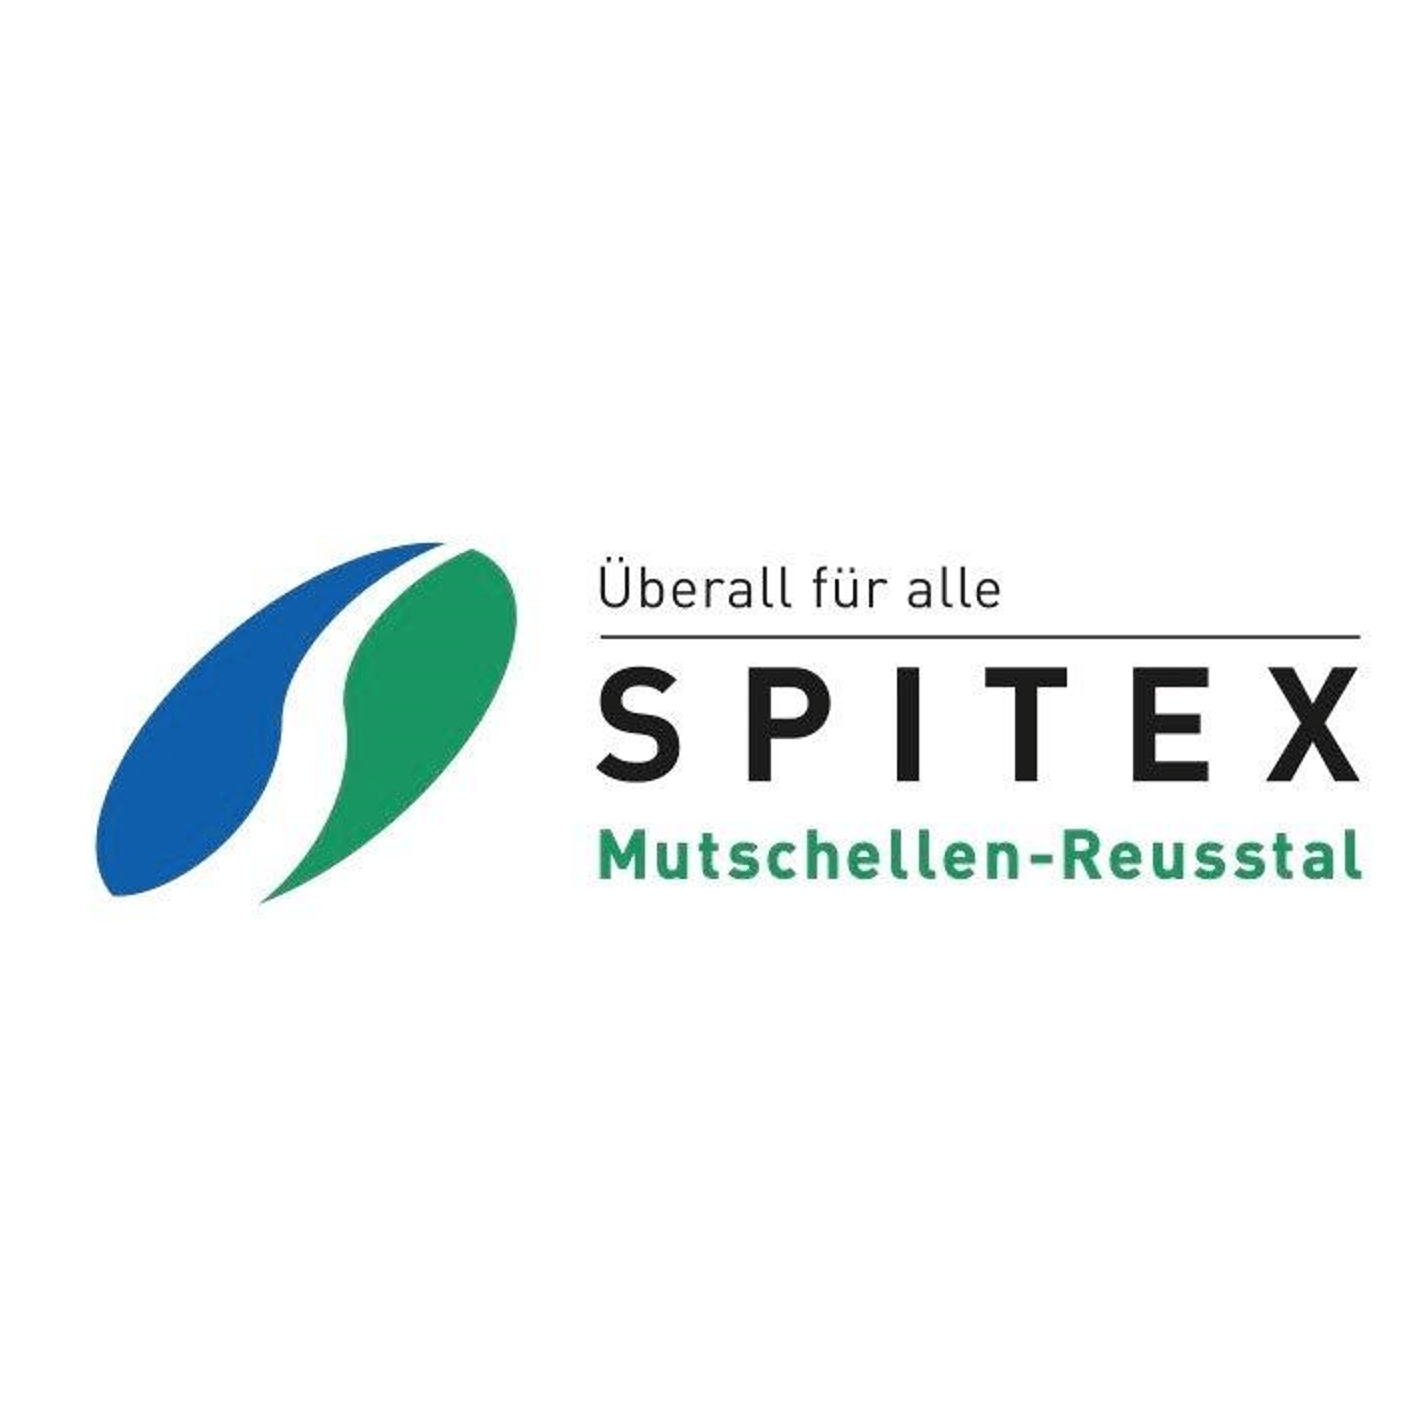 Spitex Mutschellen - Reusstal Logo